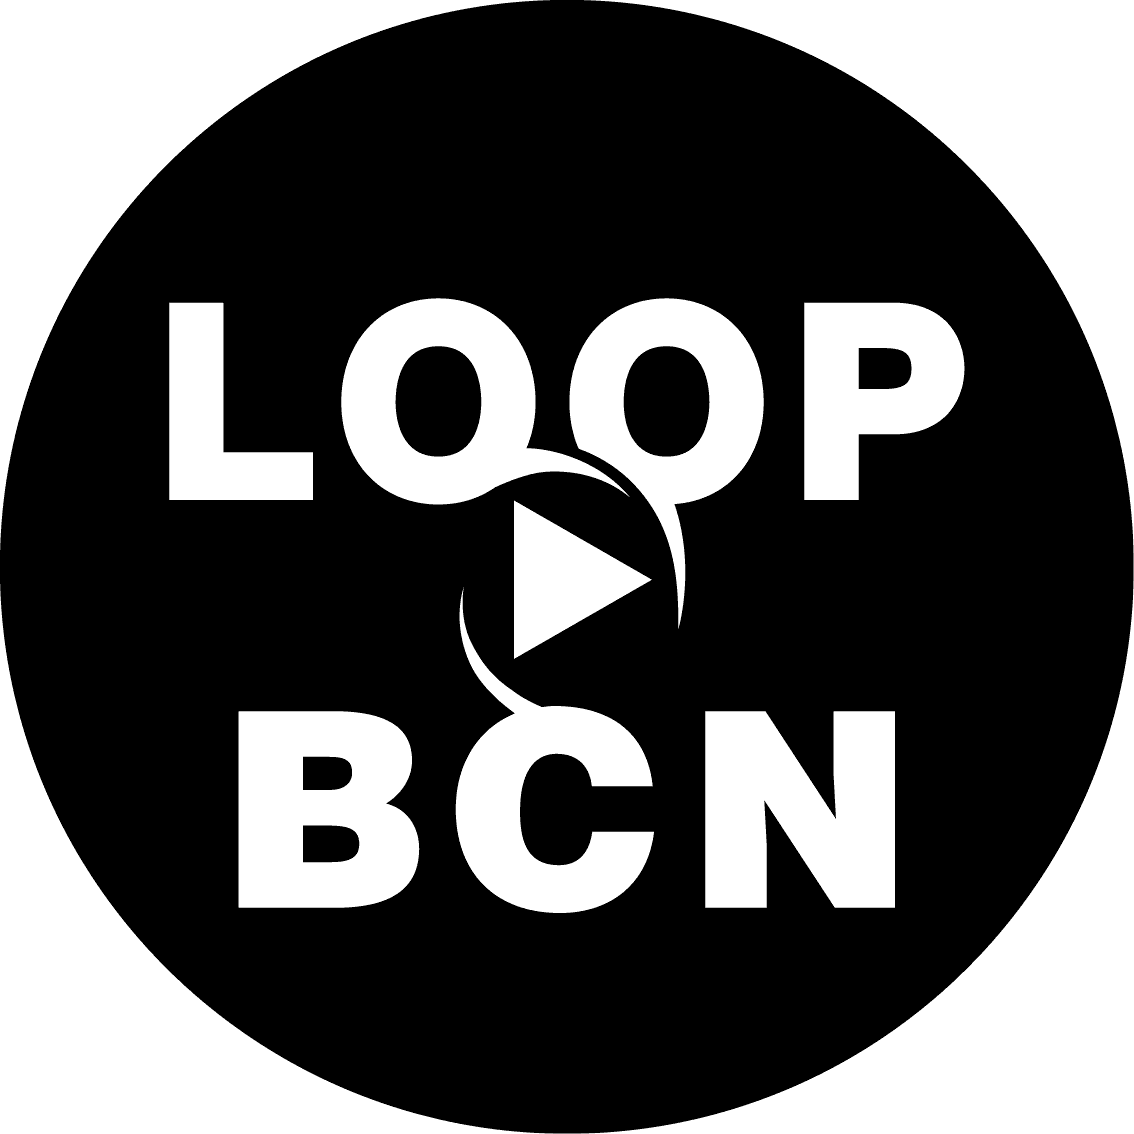 LOOP, Barcelona, 2020